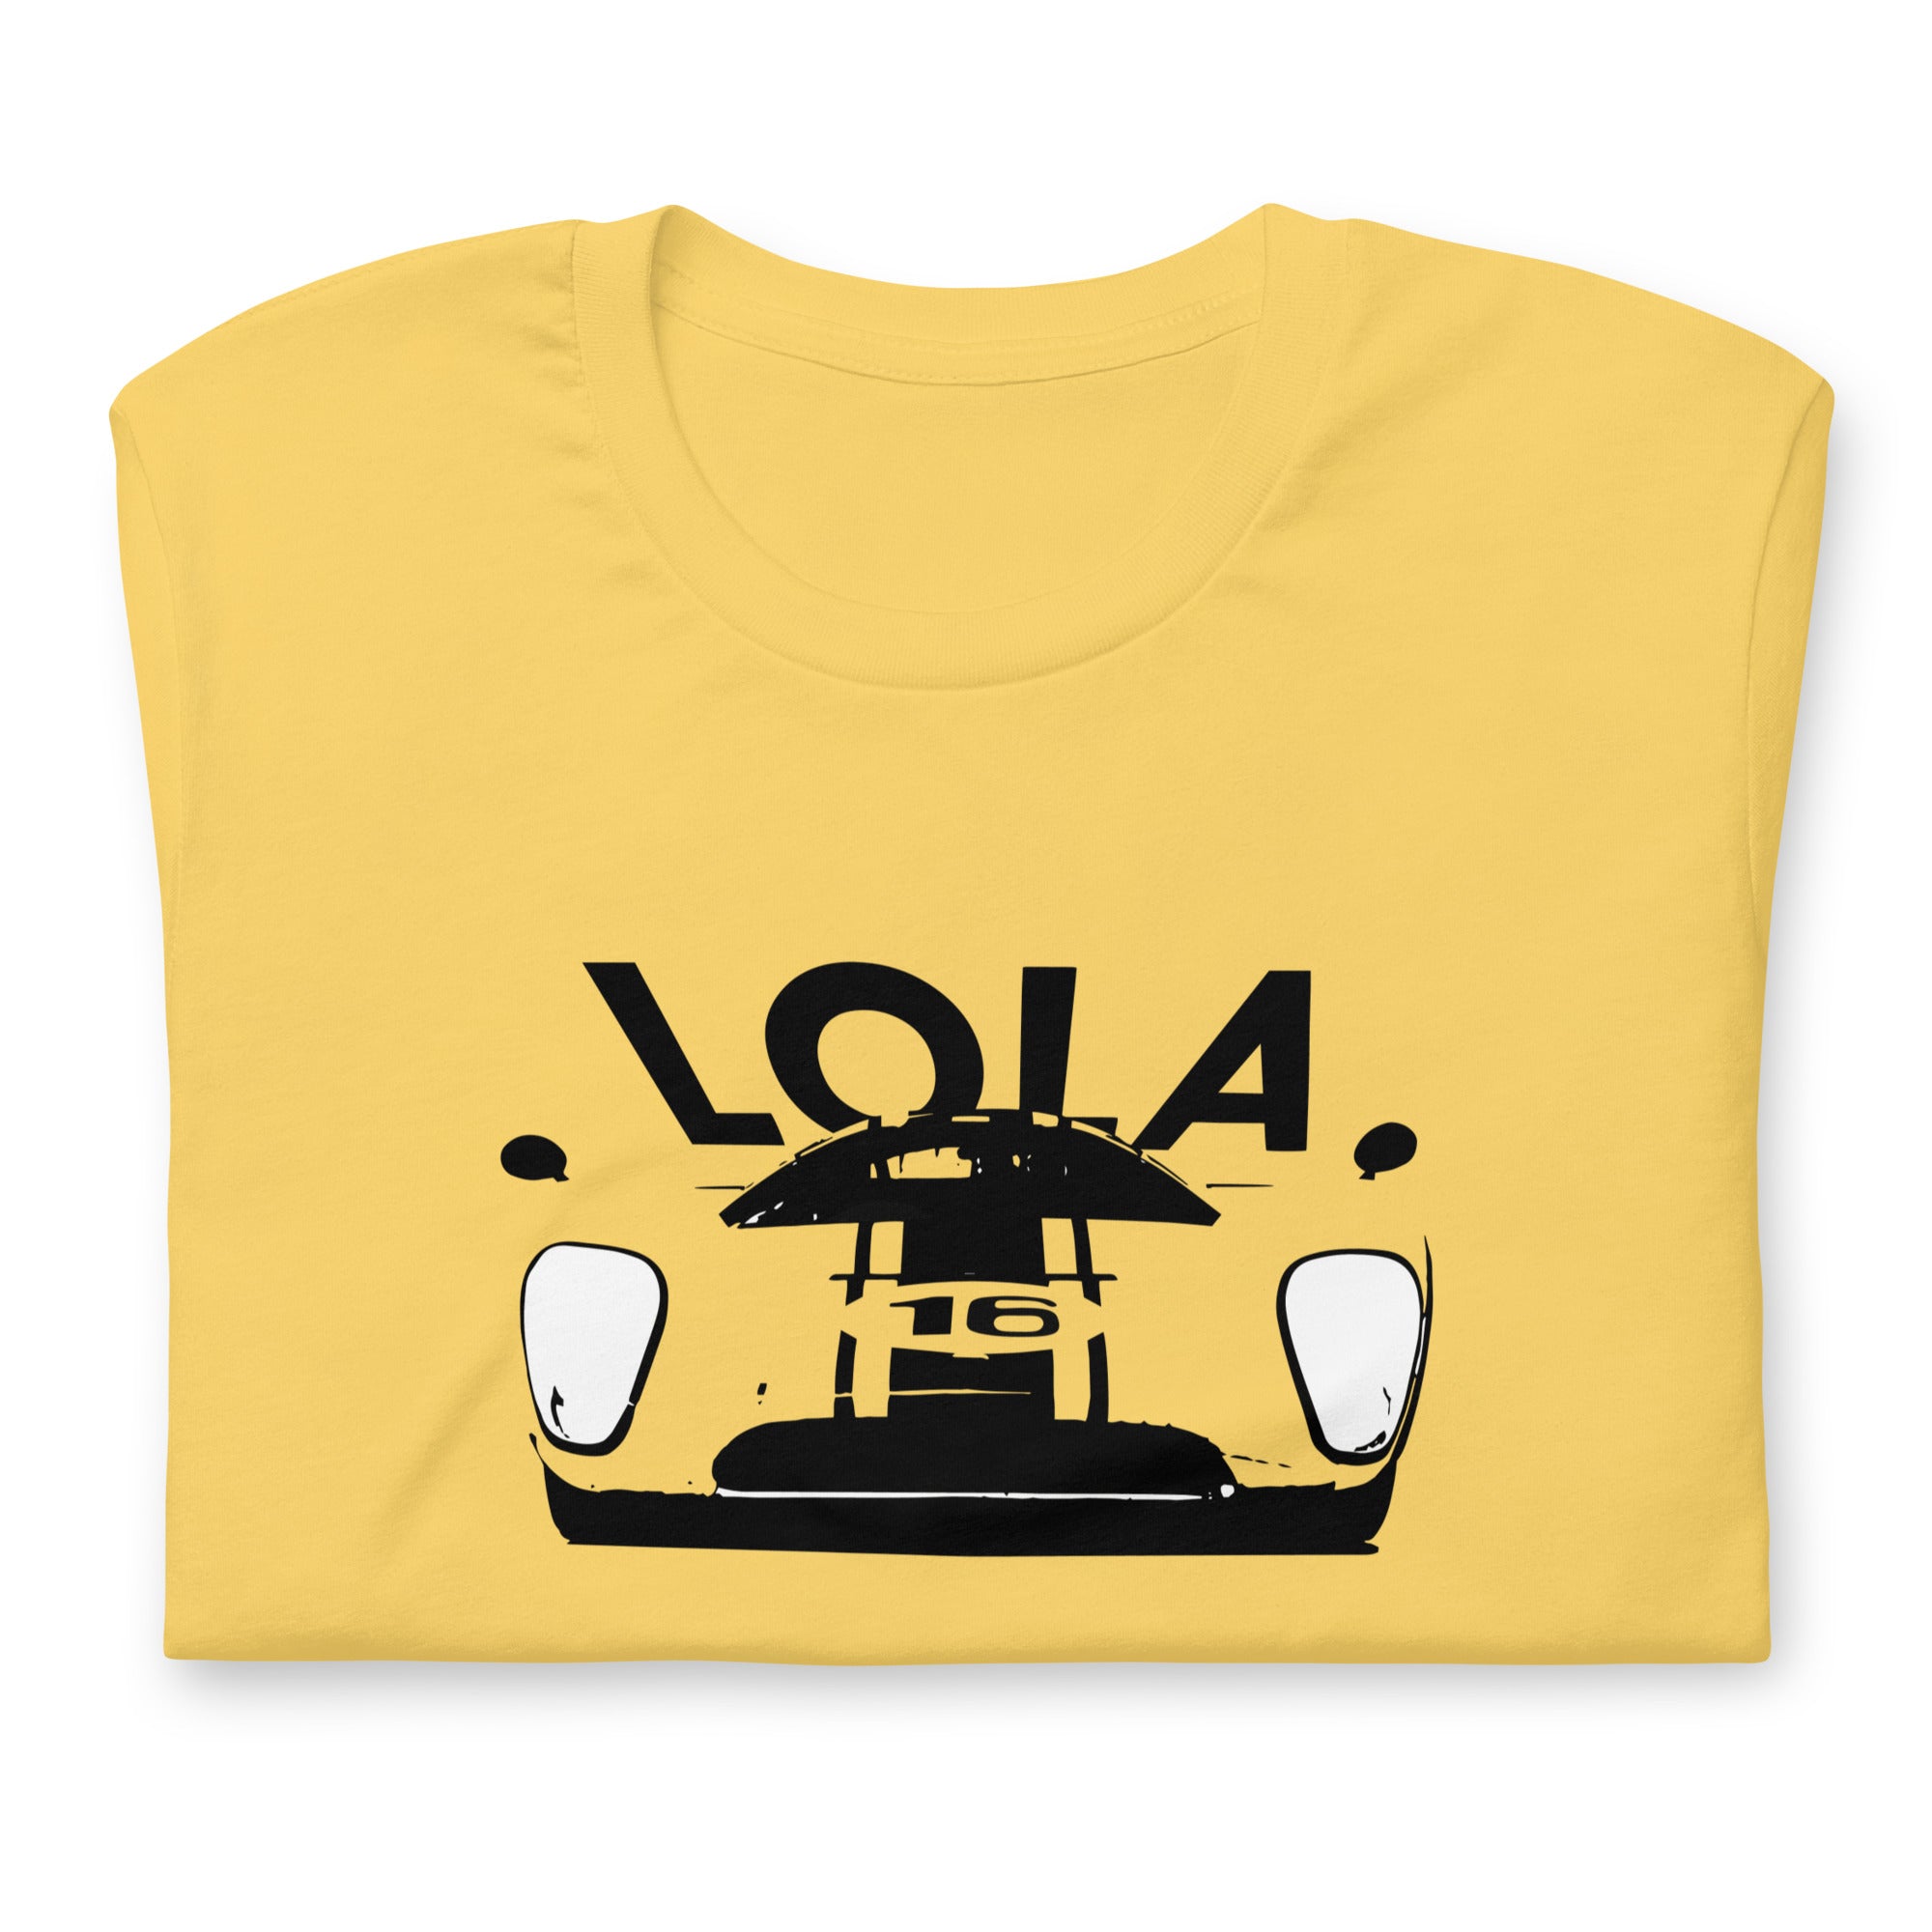 lola cars T70 MkIIIB t shirt yellow folded